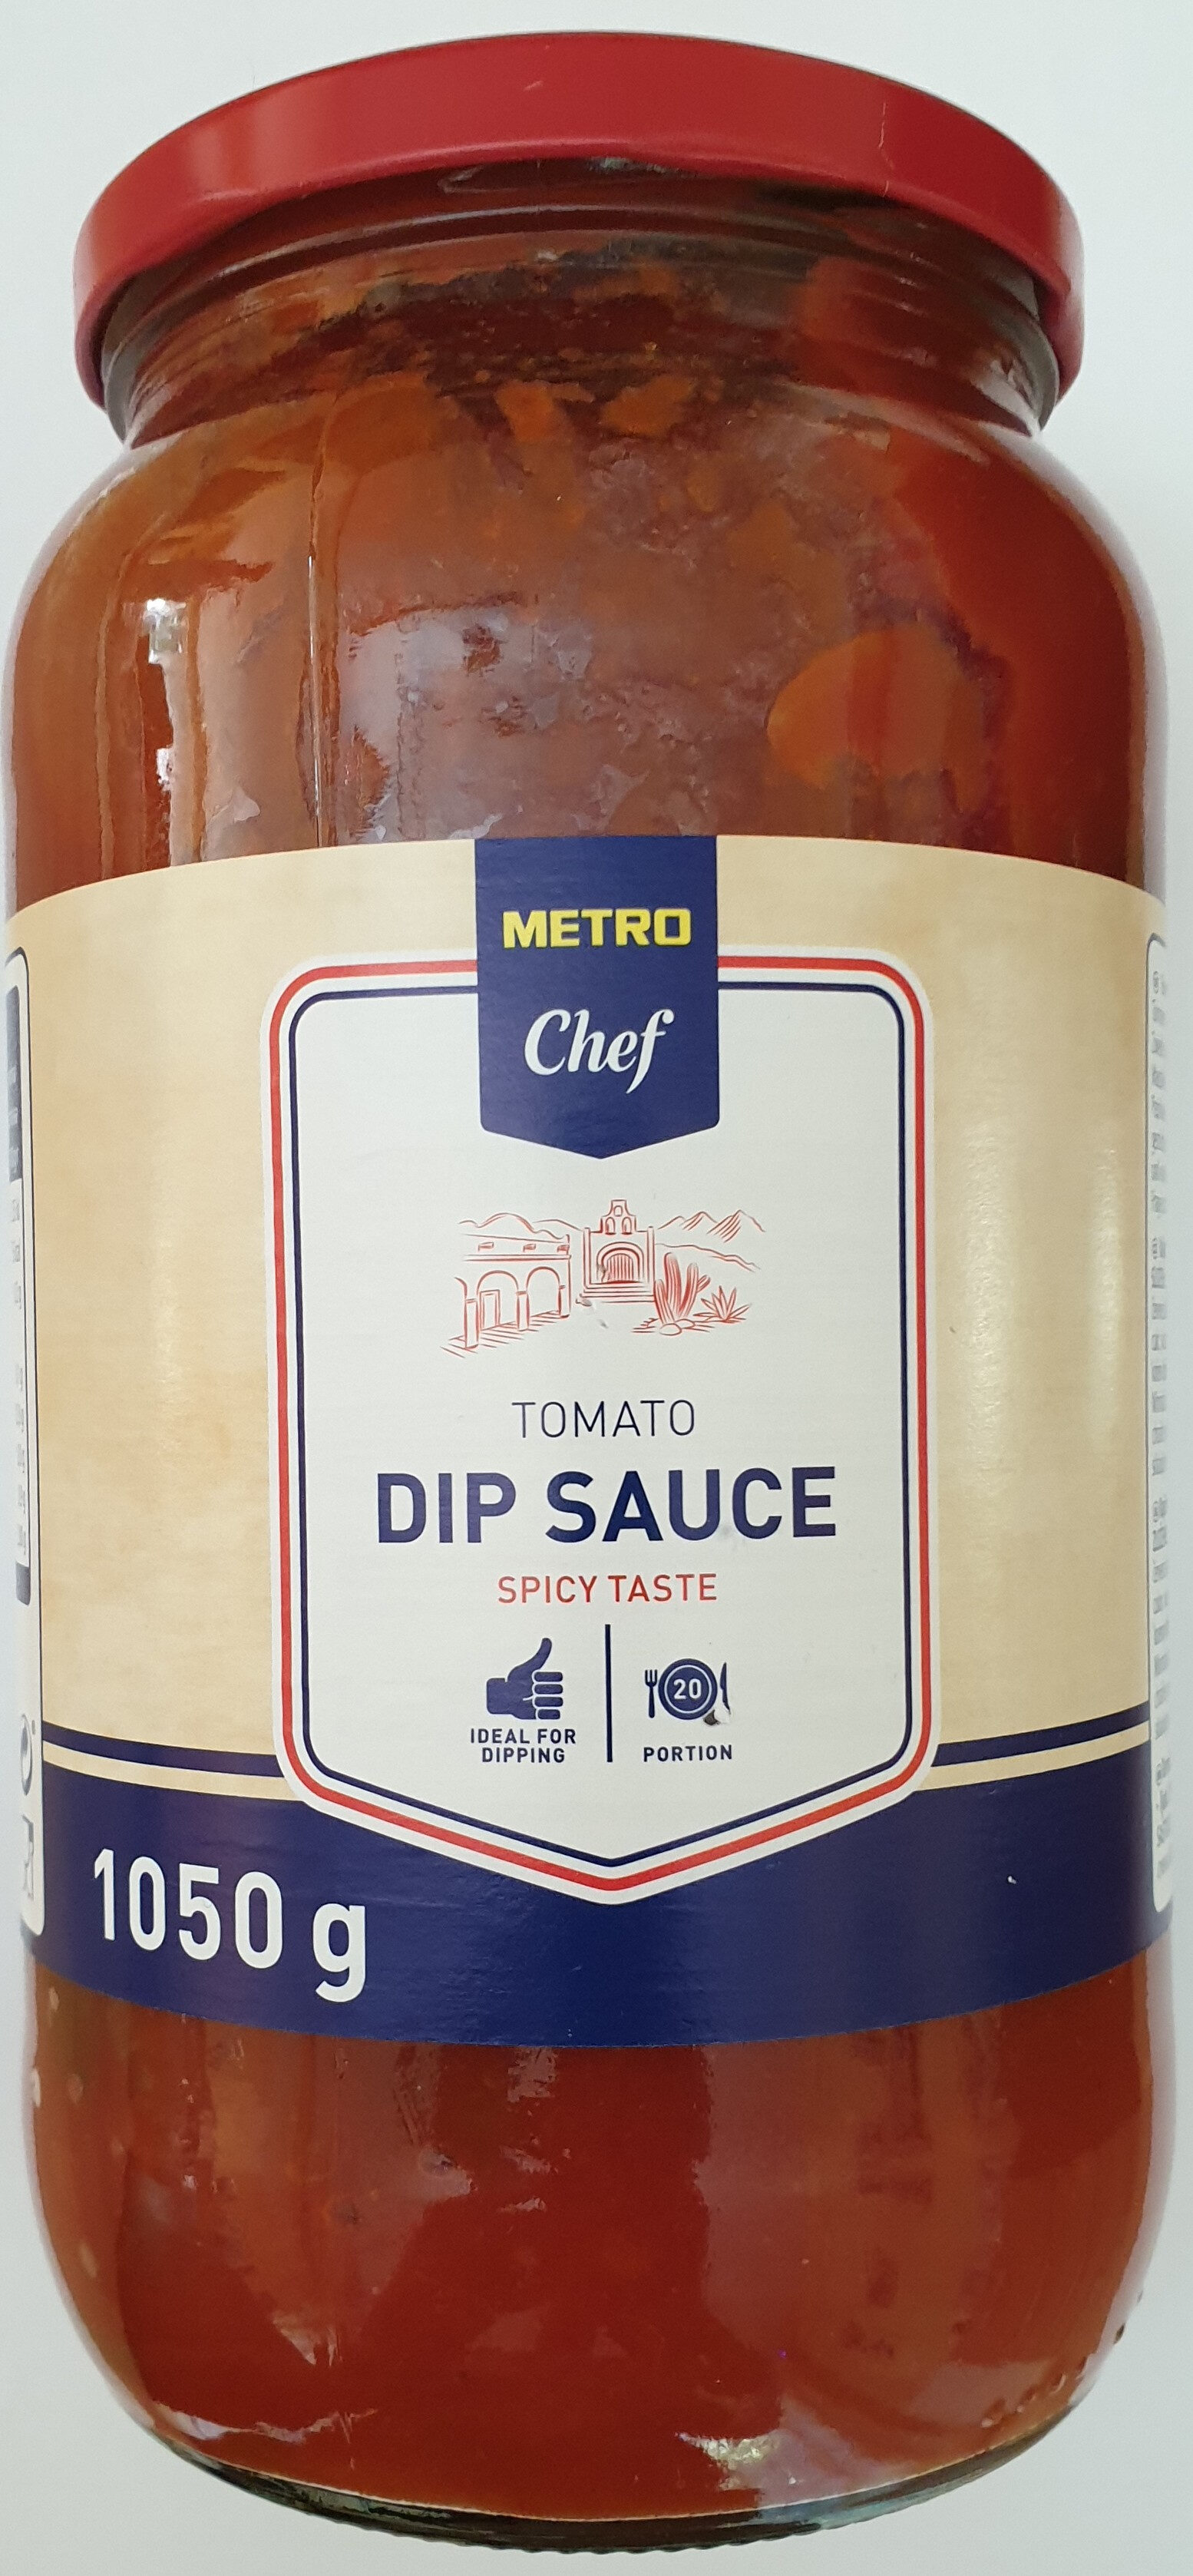 Tomato dip sauce spicy taste - Product - de